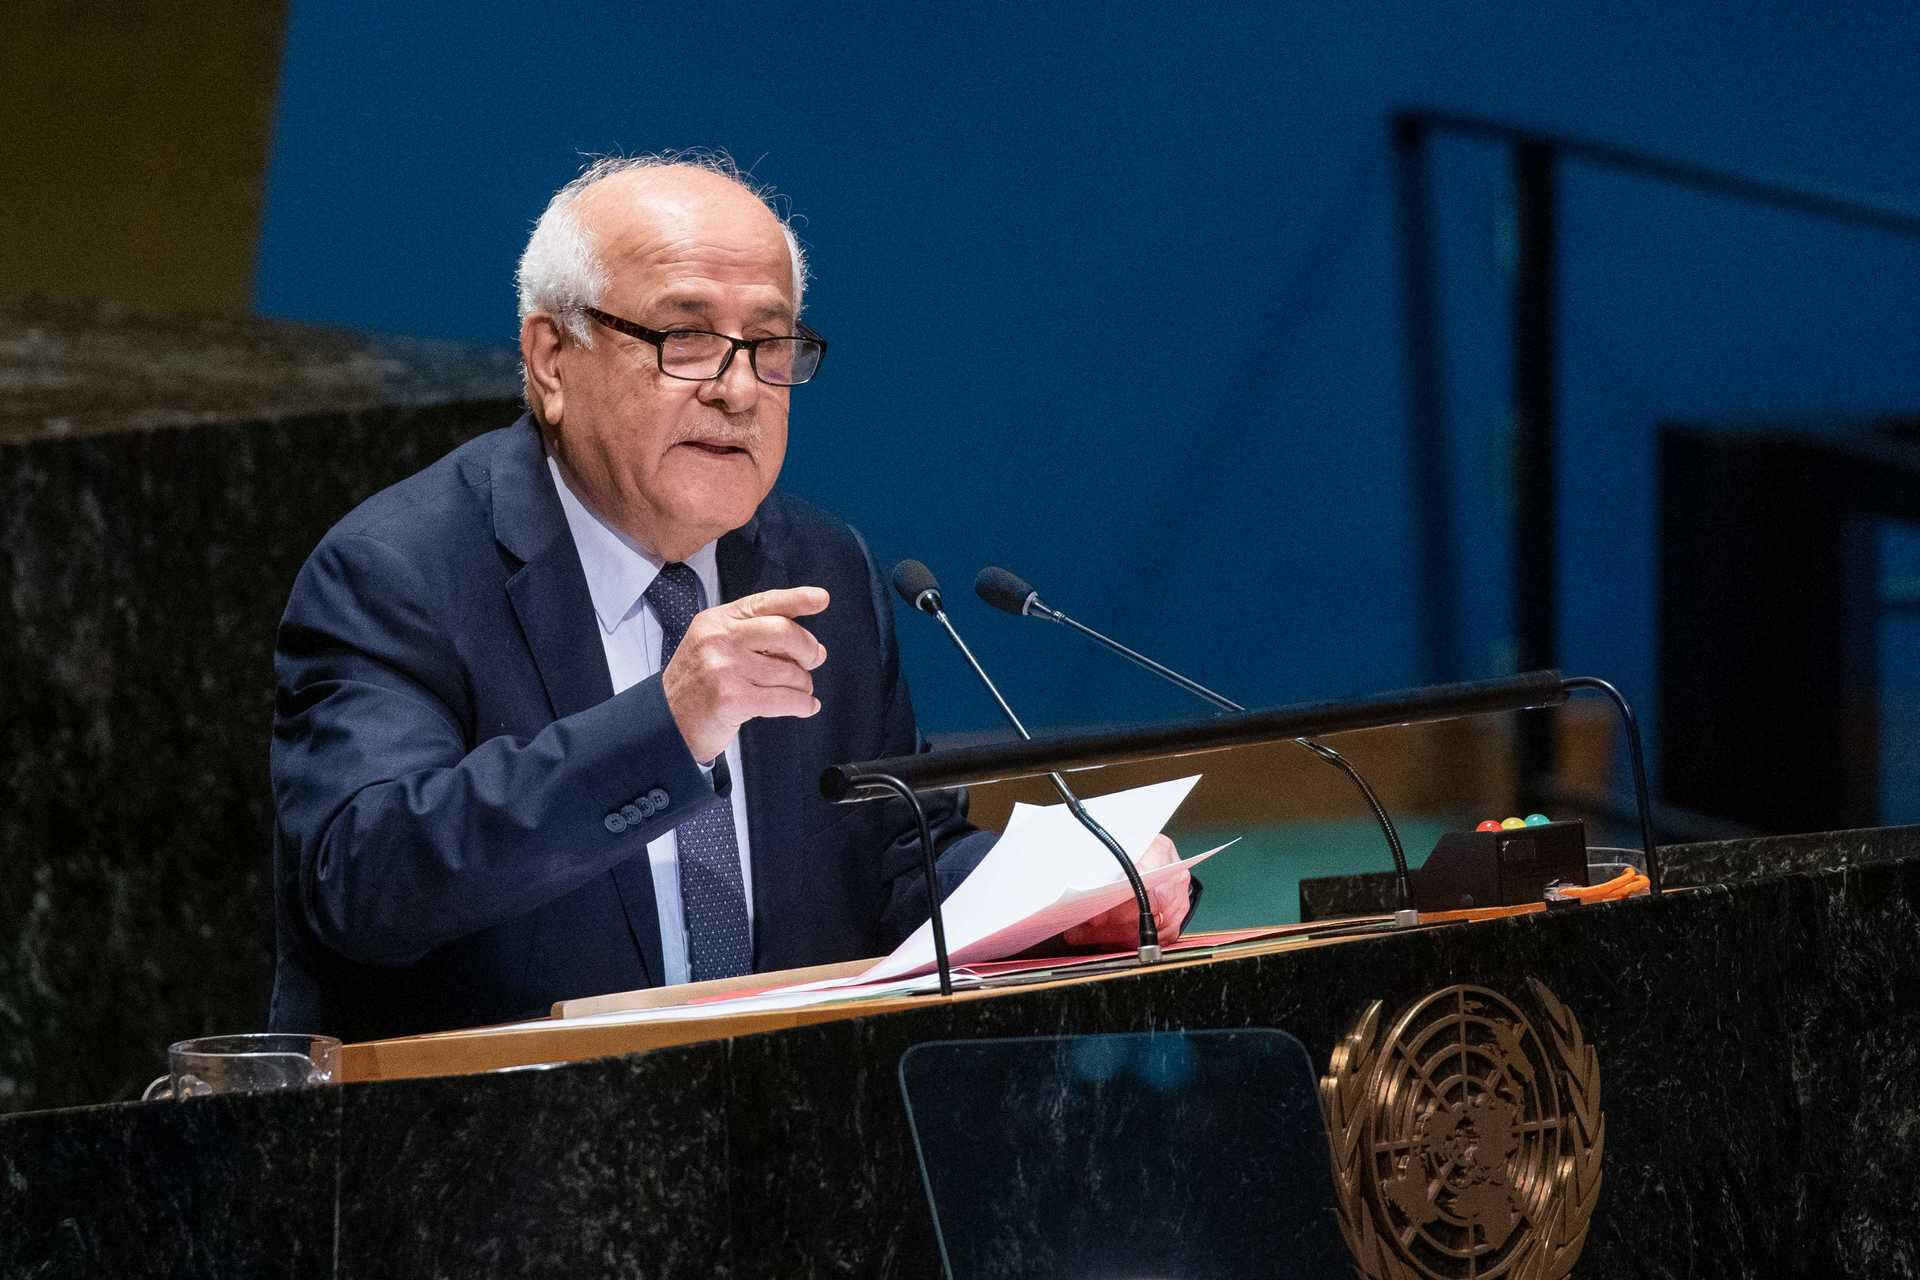 Assembleia Geral da ONU – Terceiro dia e Palestina